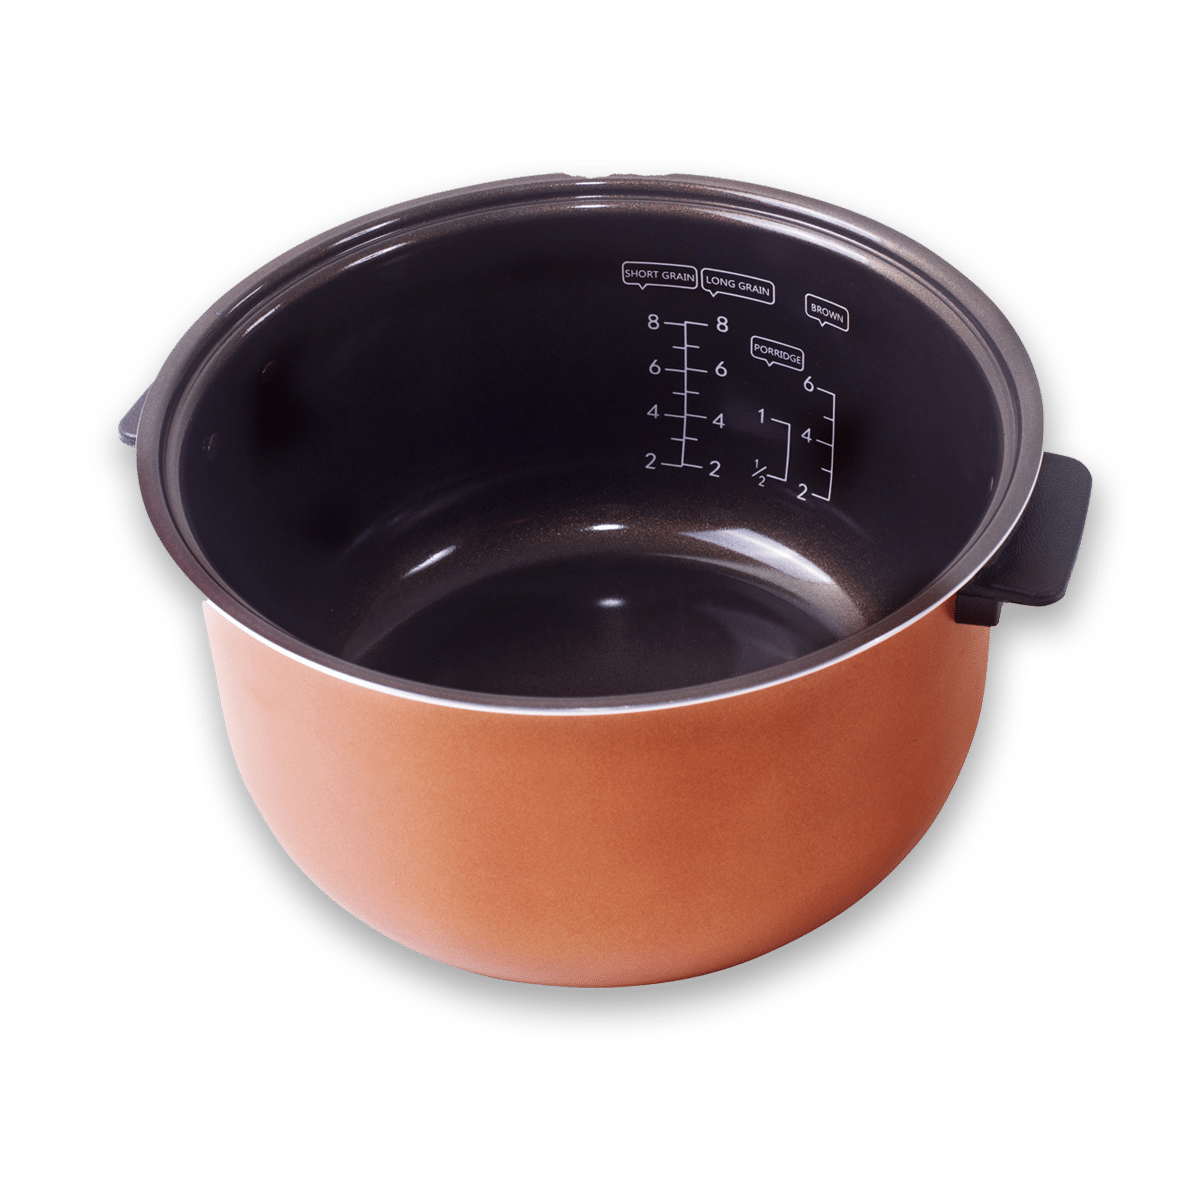 Sakura Rice Cooker ‘Ninja’ Ceramic Coated Inner Bowl